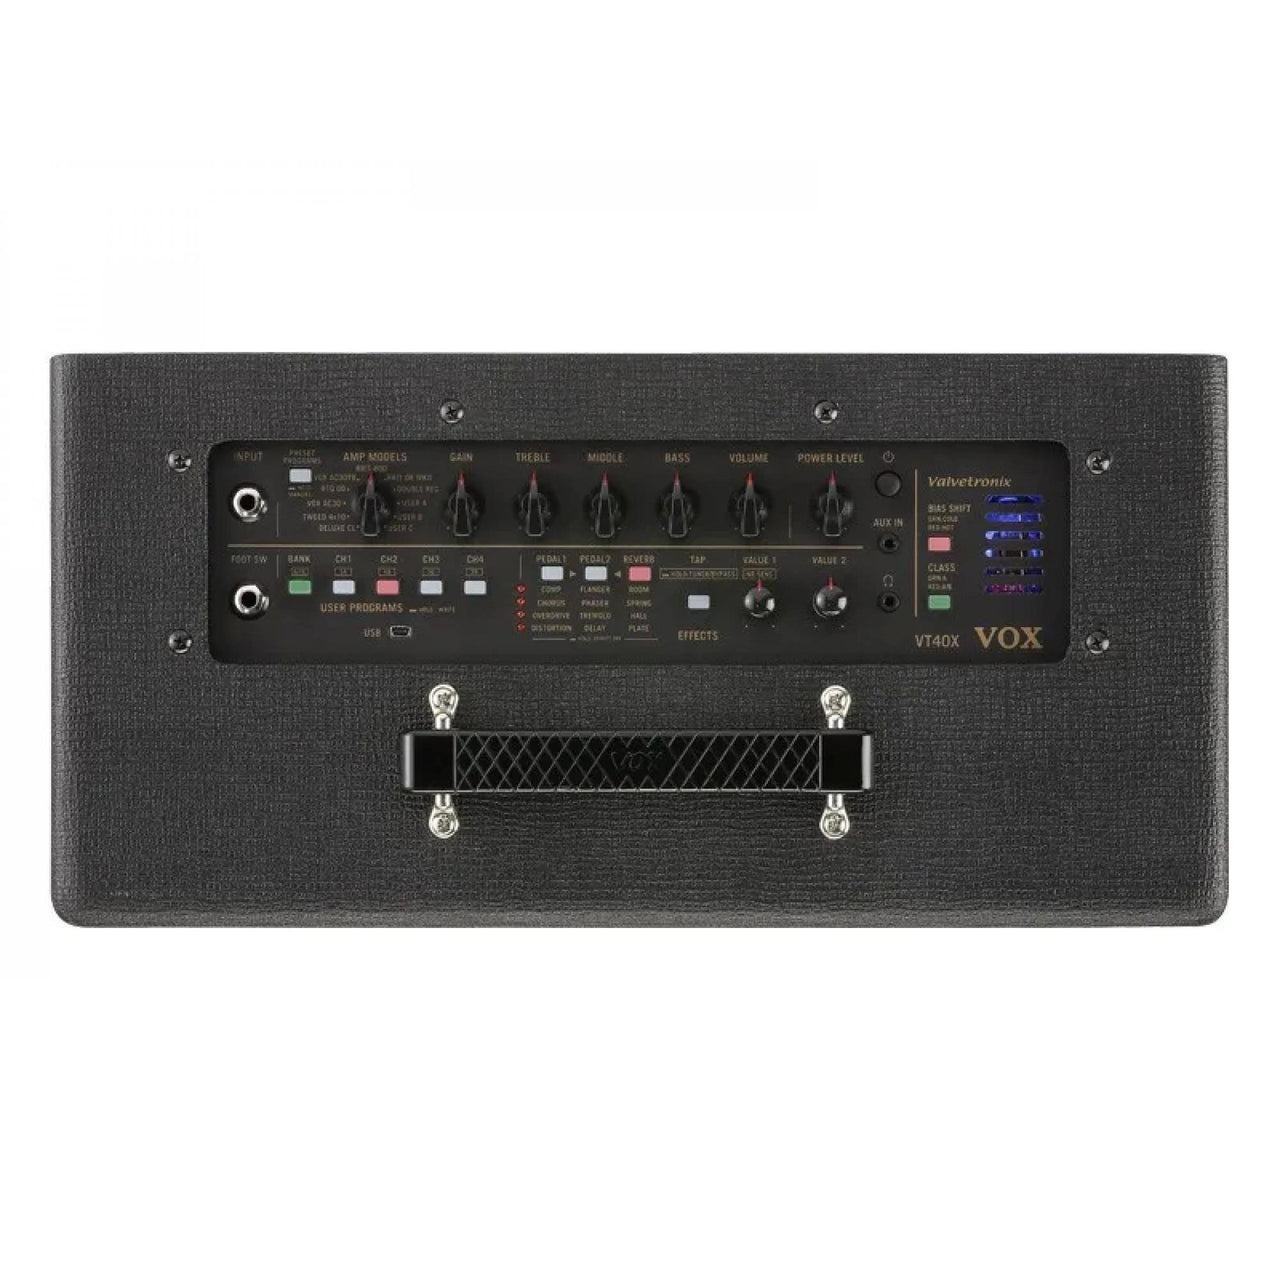 Amplificador Vox Para Guitarra Vt40x Modelado Digital Series Vtx 40w Valvular